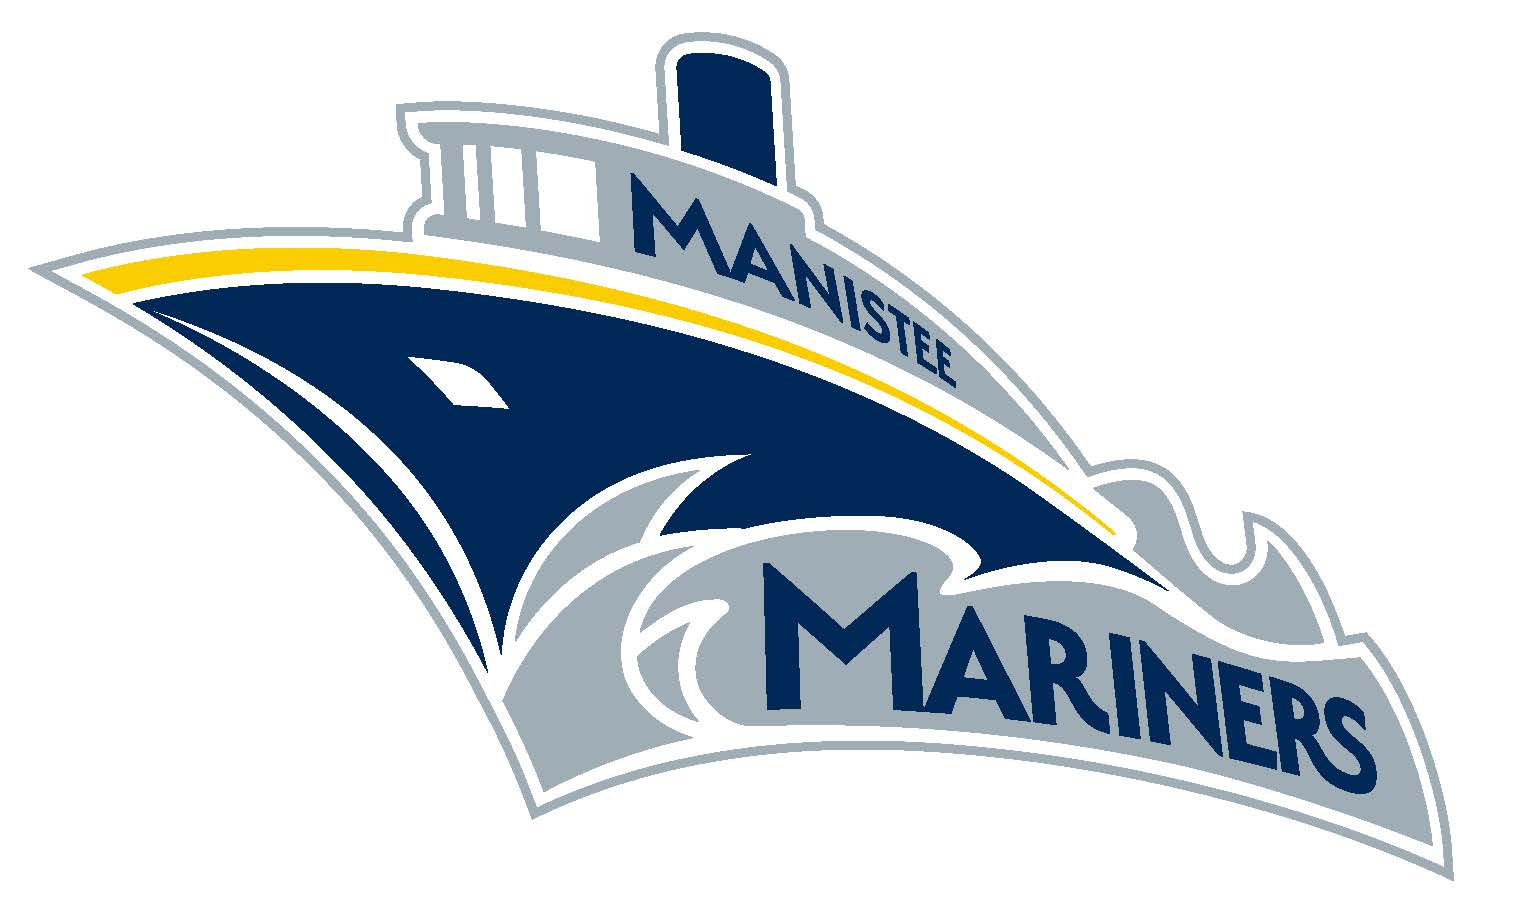 Mariners athletic logo